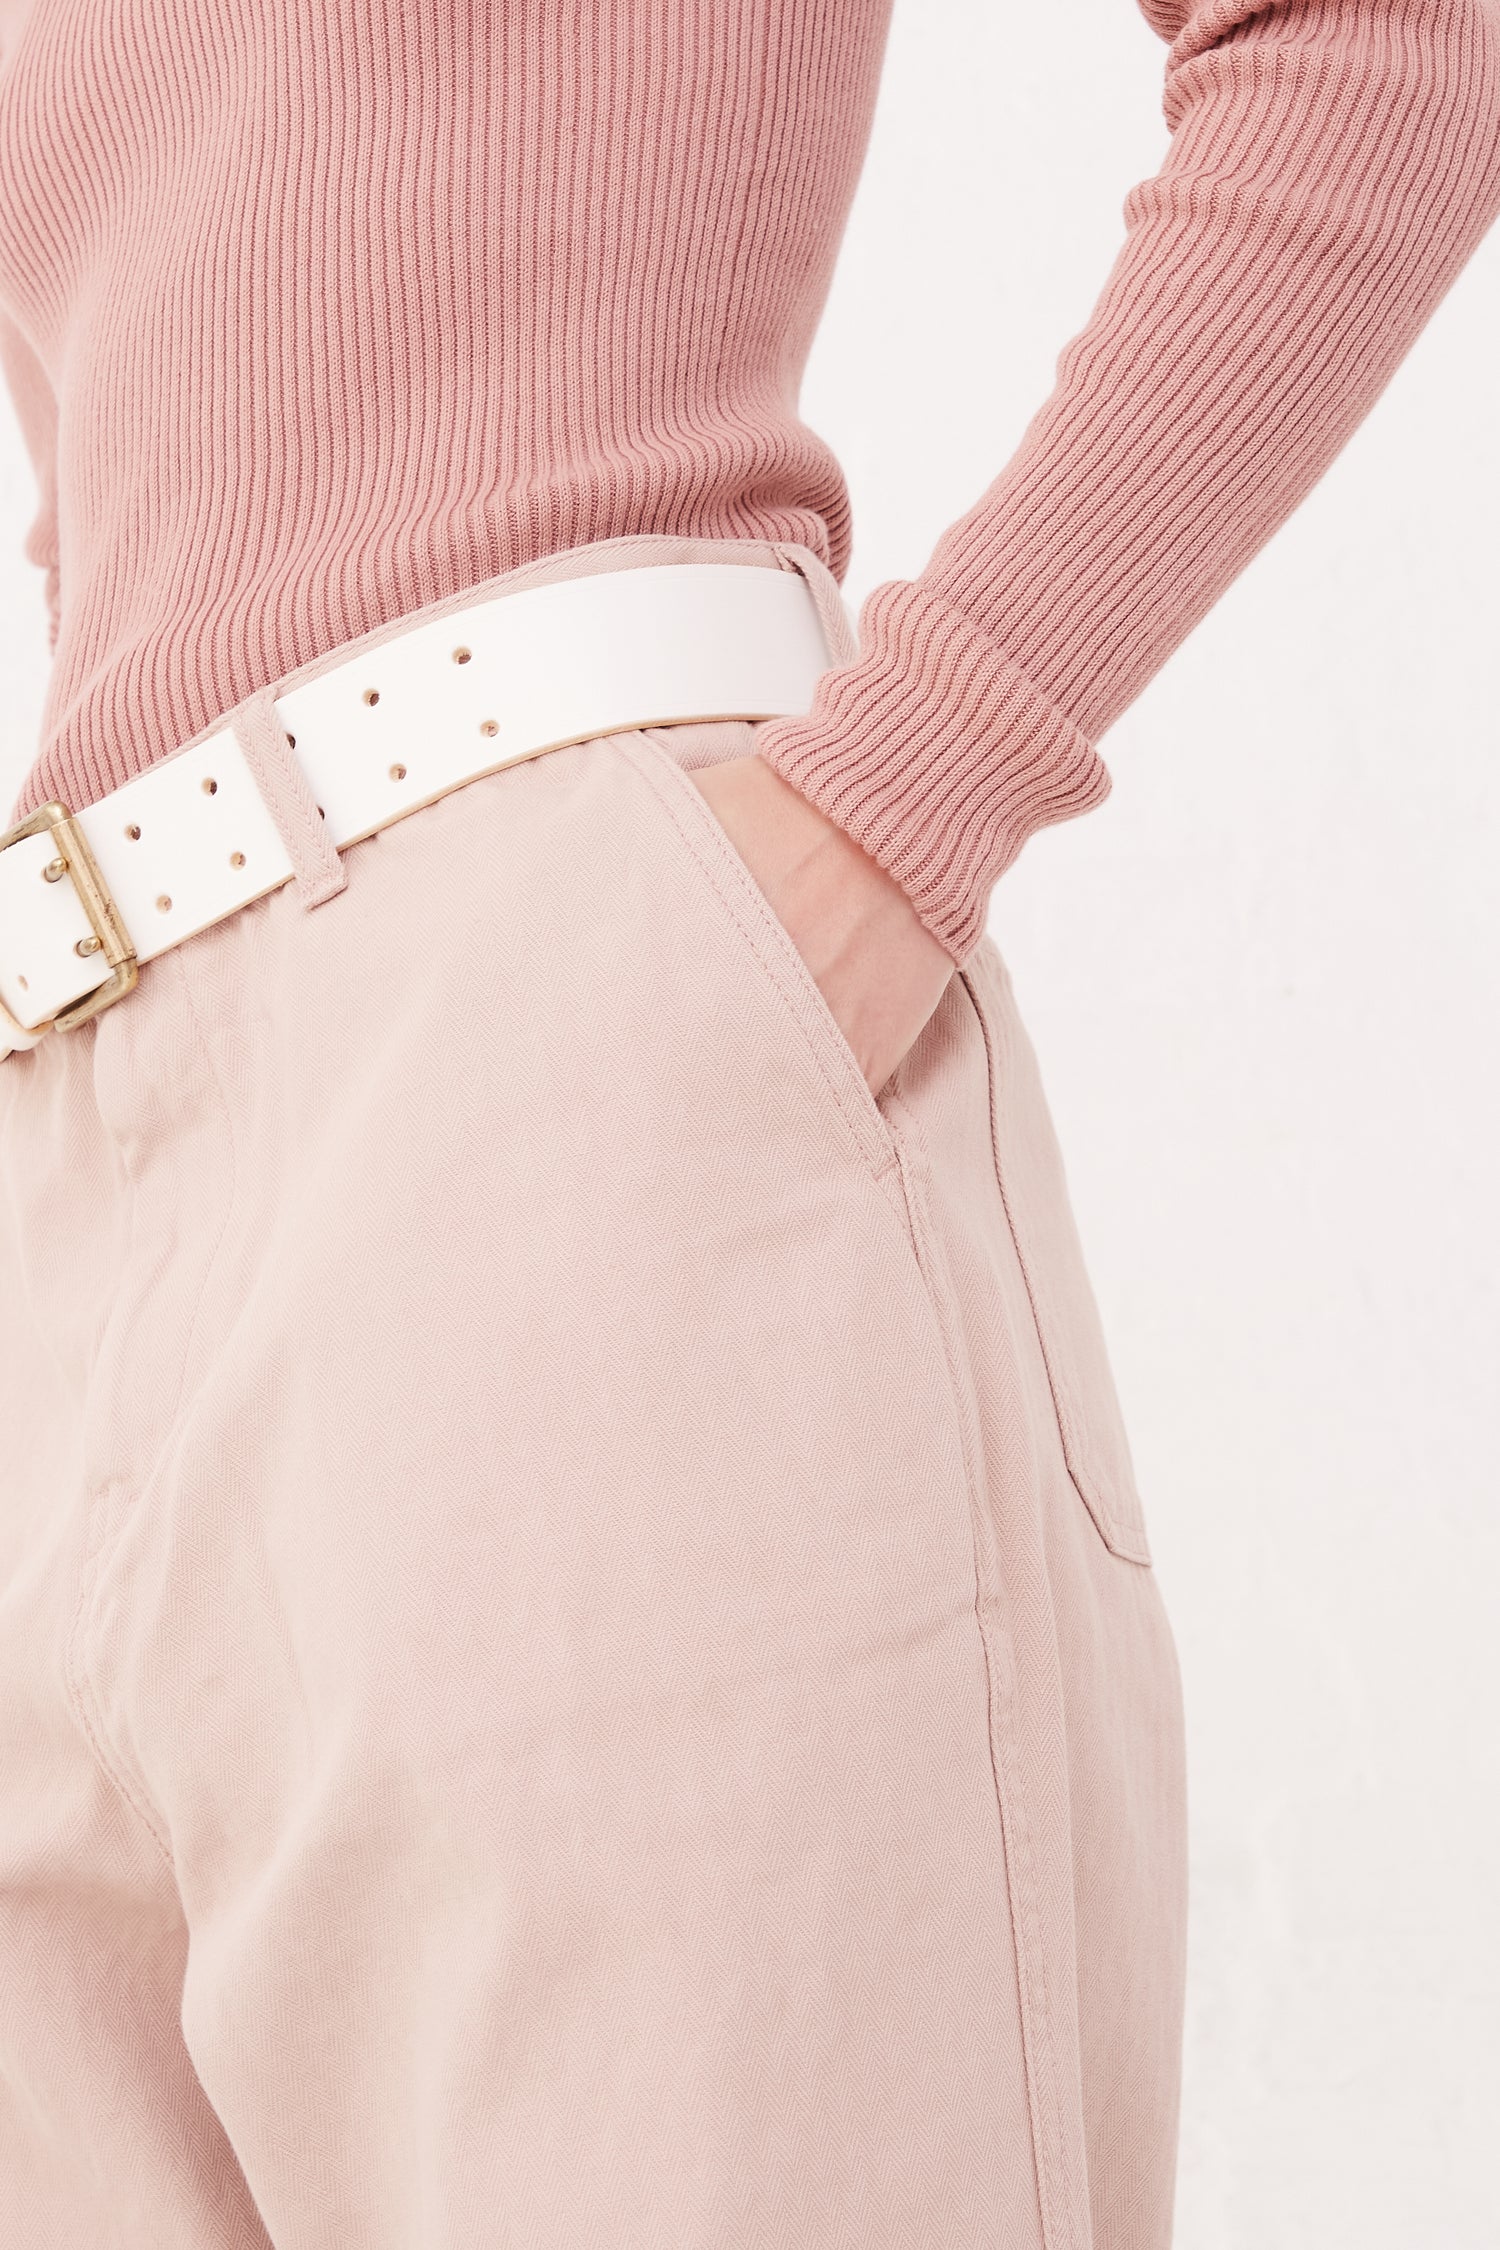 A model wearing Herringbone Pants in Pink by Ichi Antiquités.